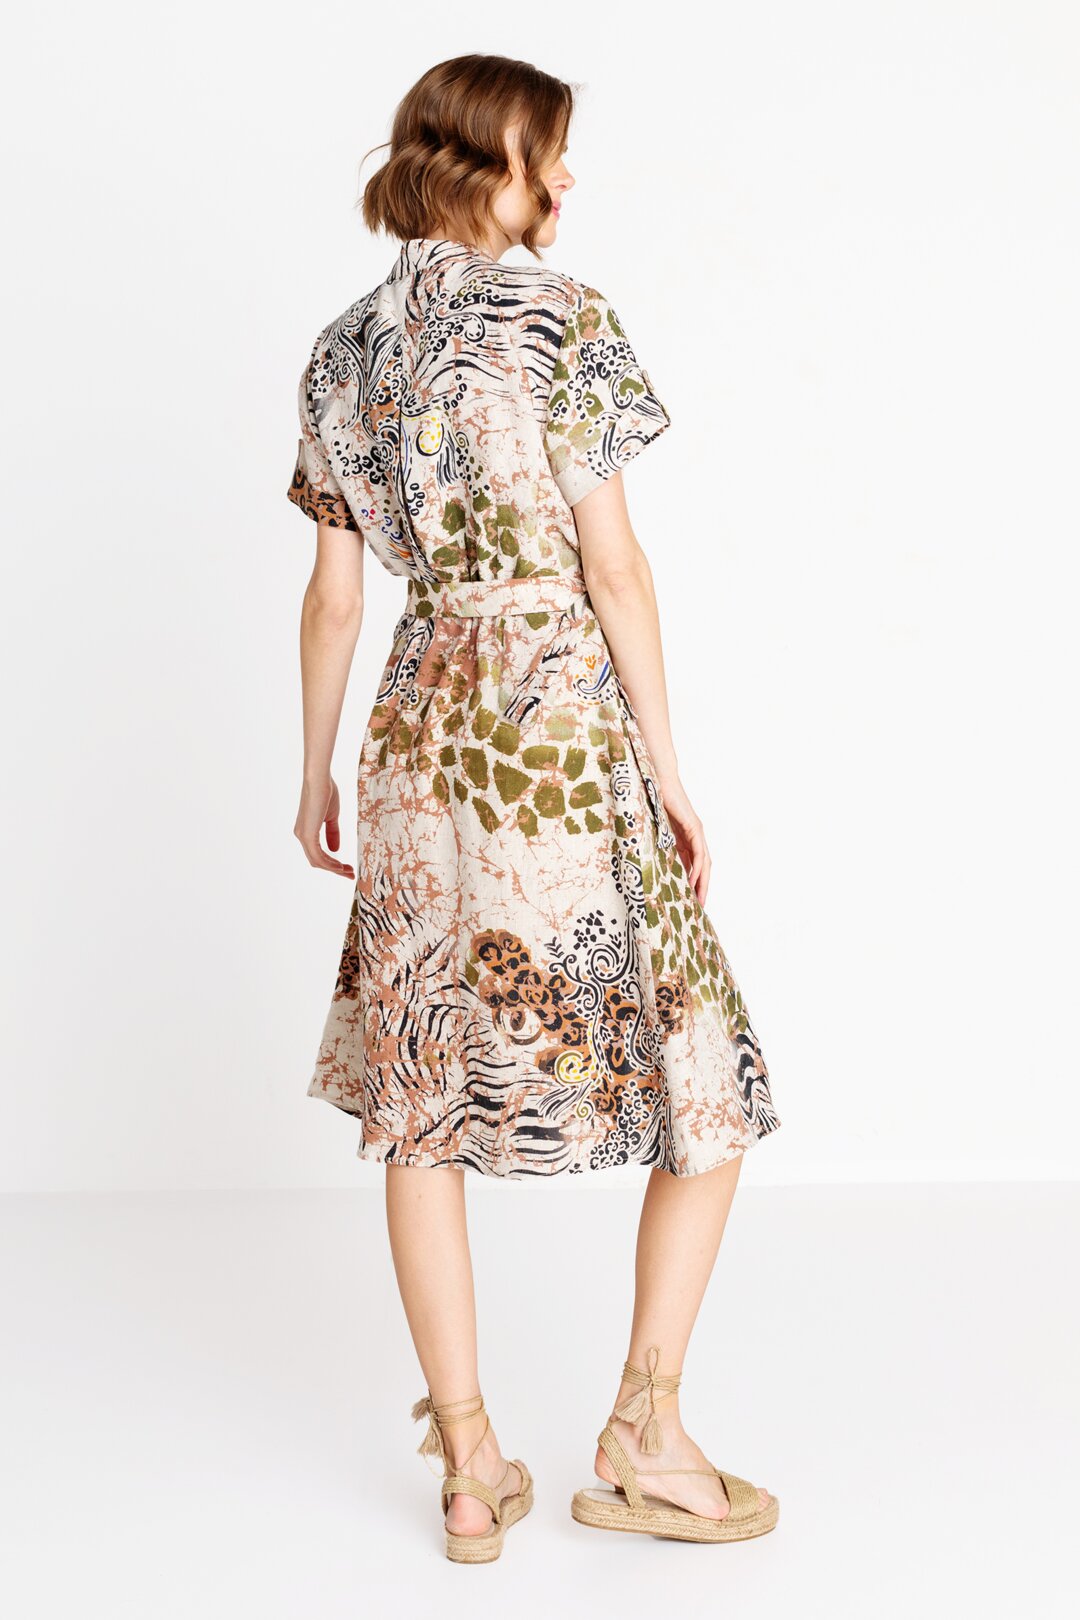 Bedrucktes Safari-Kleid